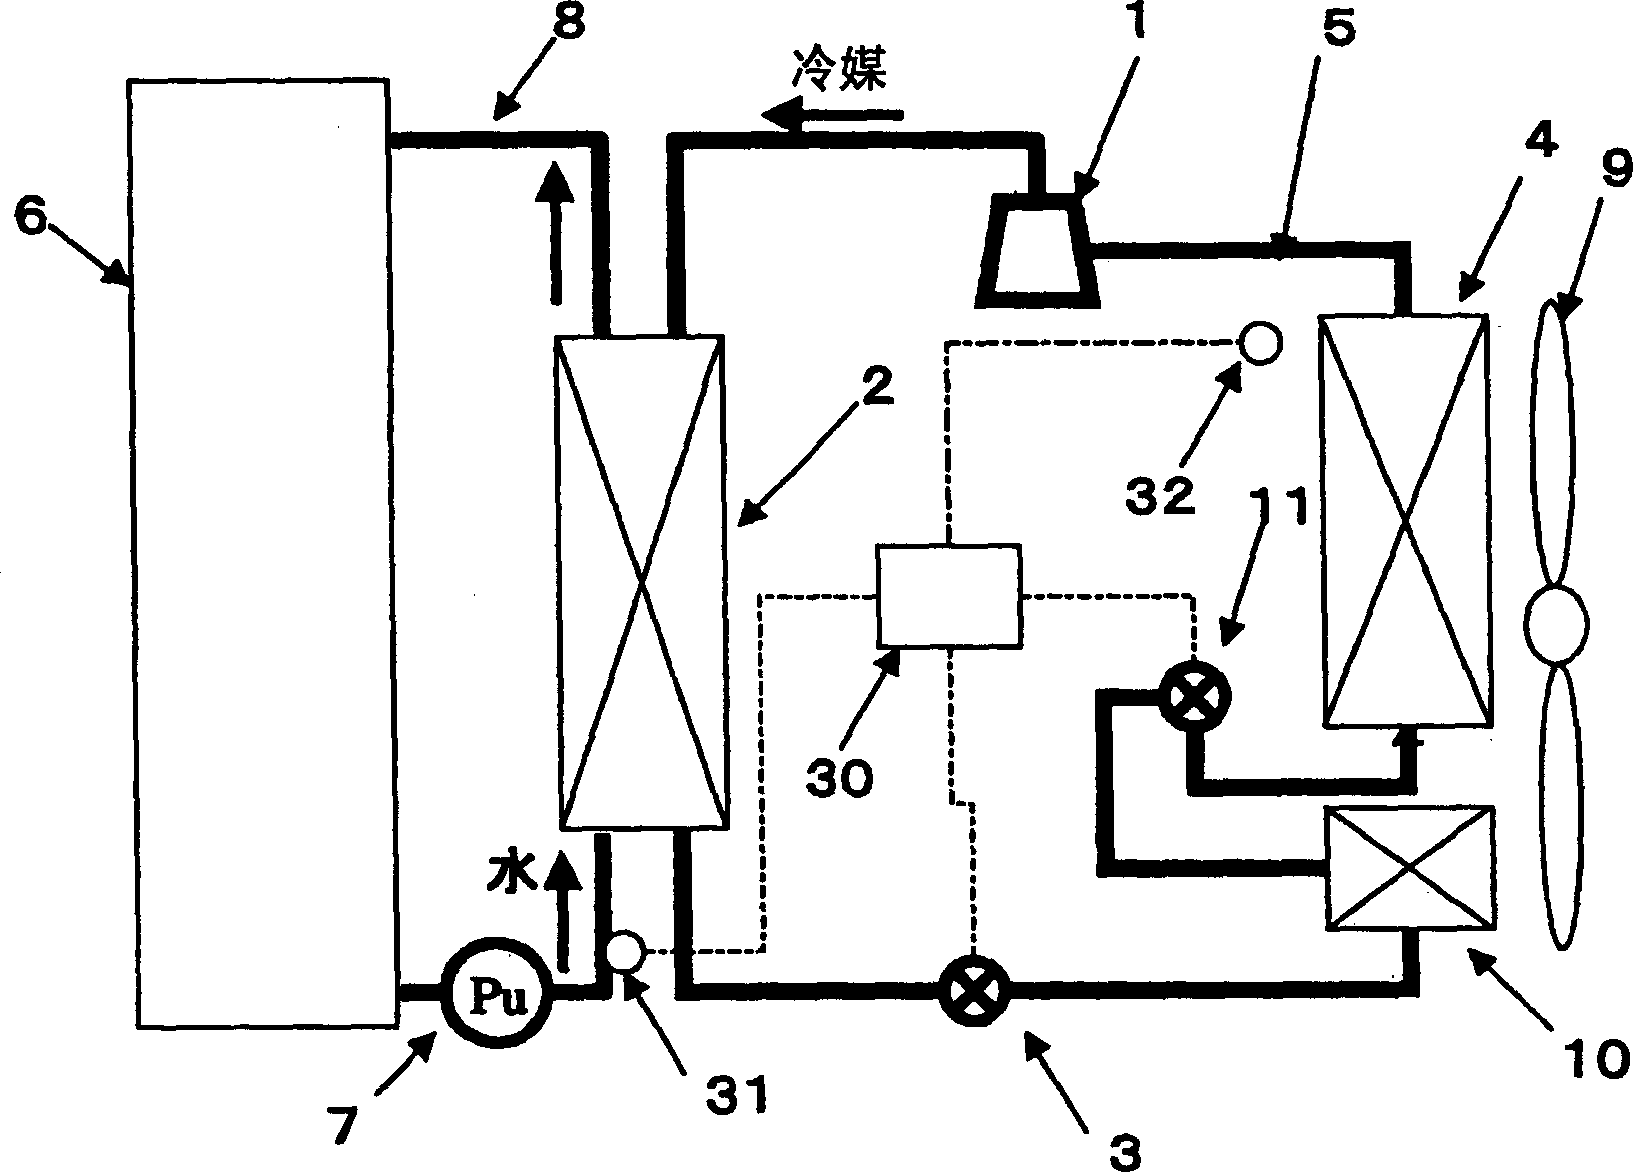 Heat-pump type hot water supply system